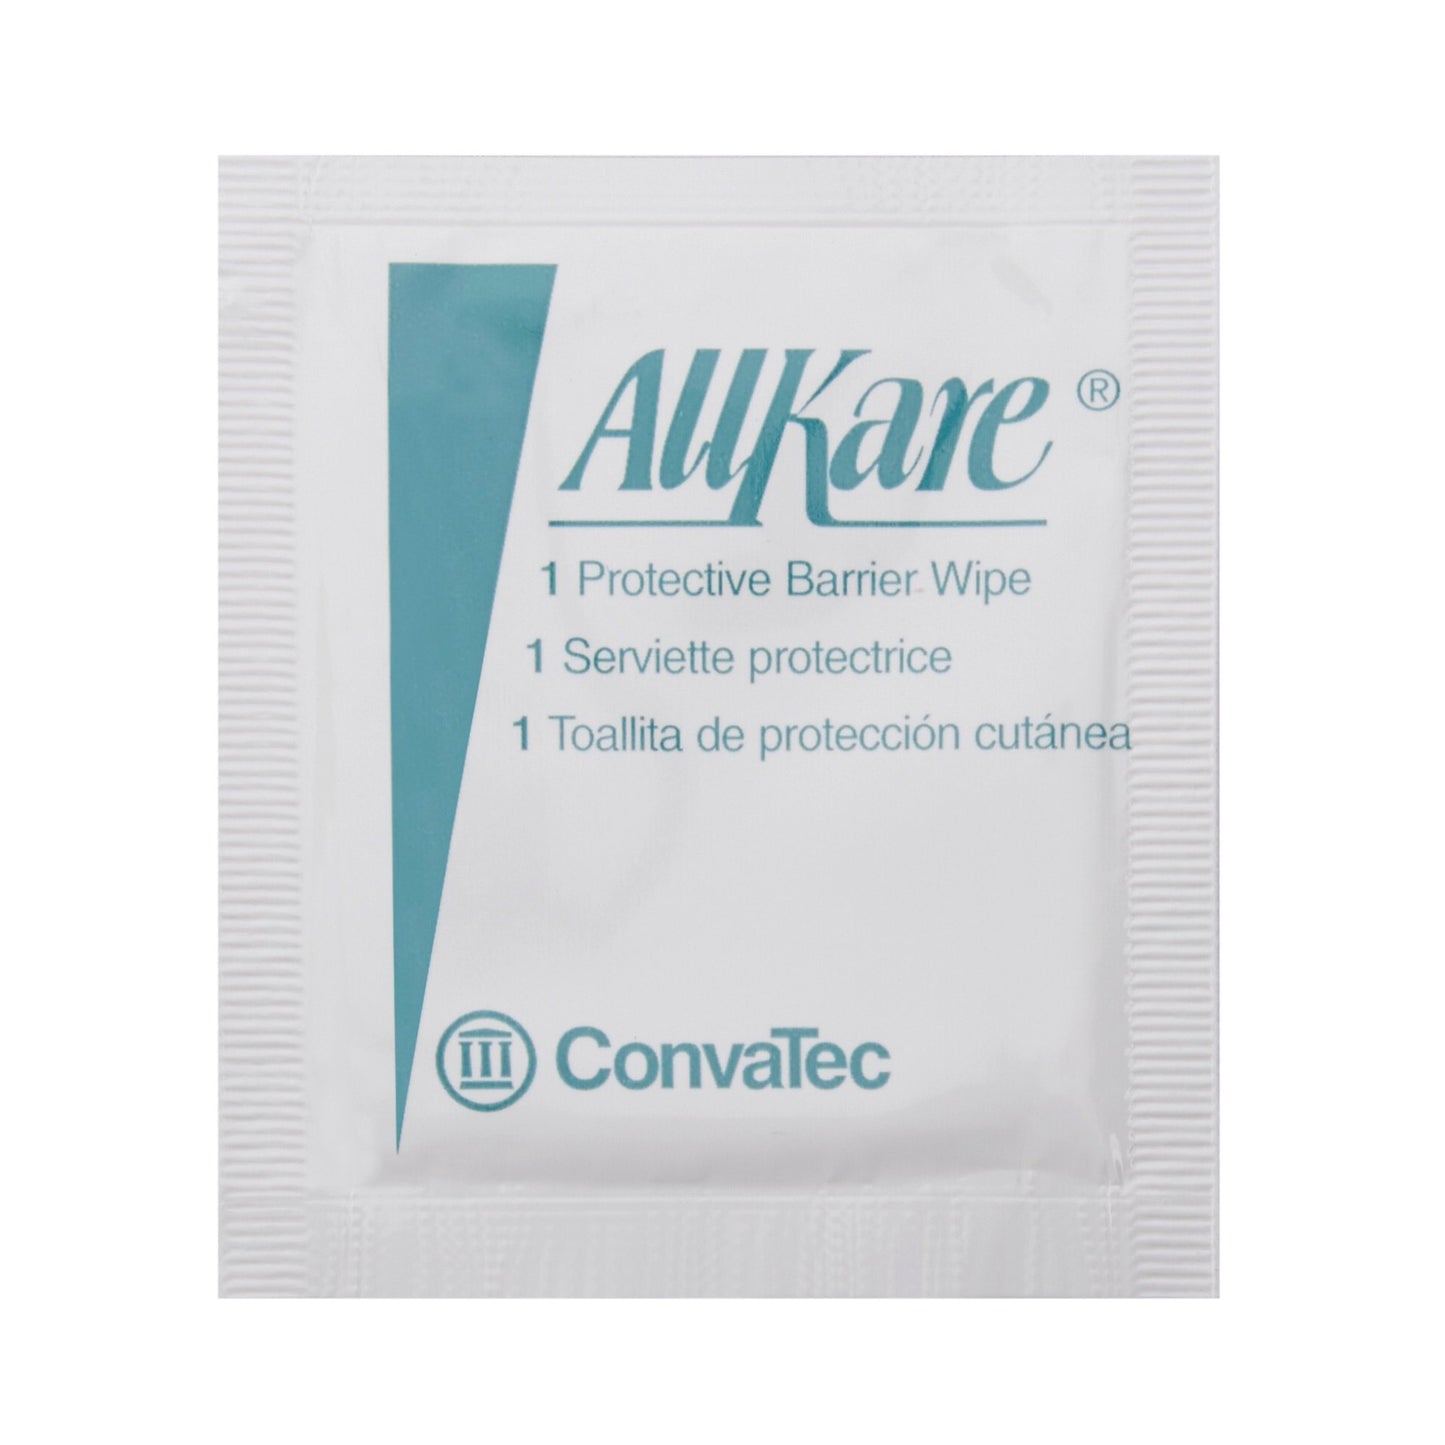 AllKare Skin Barrier Wipes, 100 ct